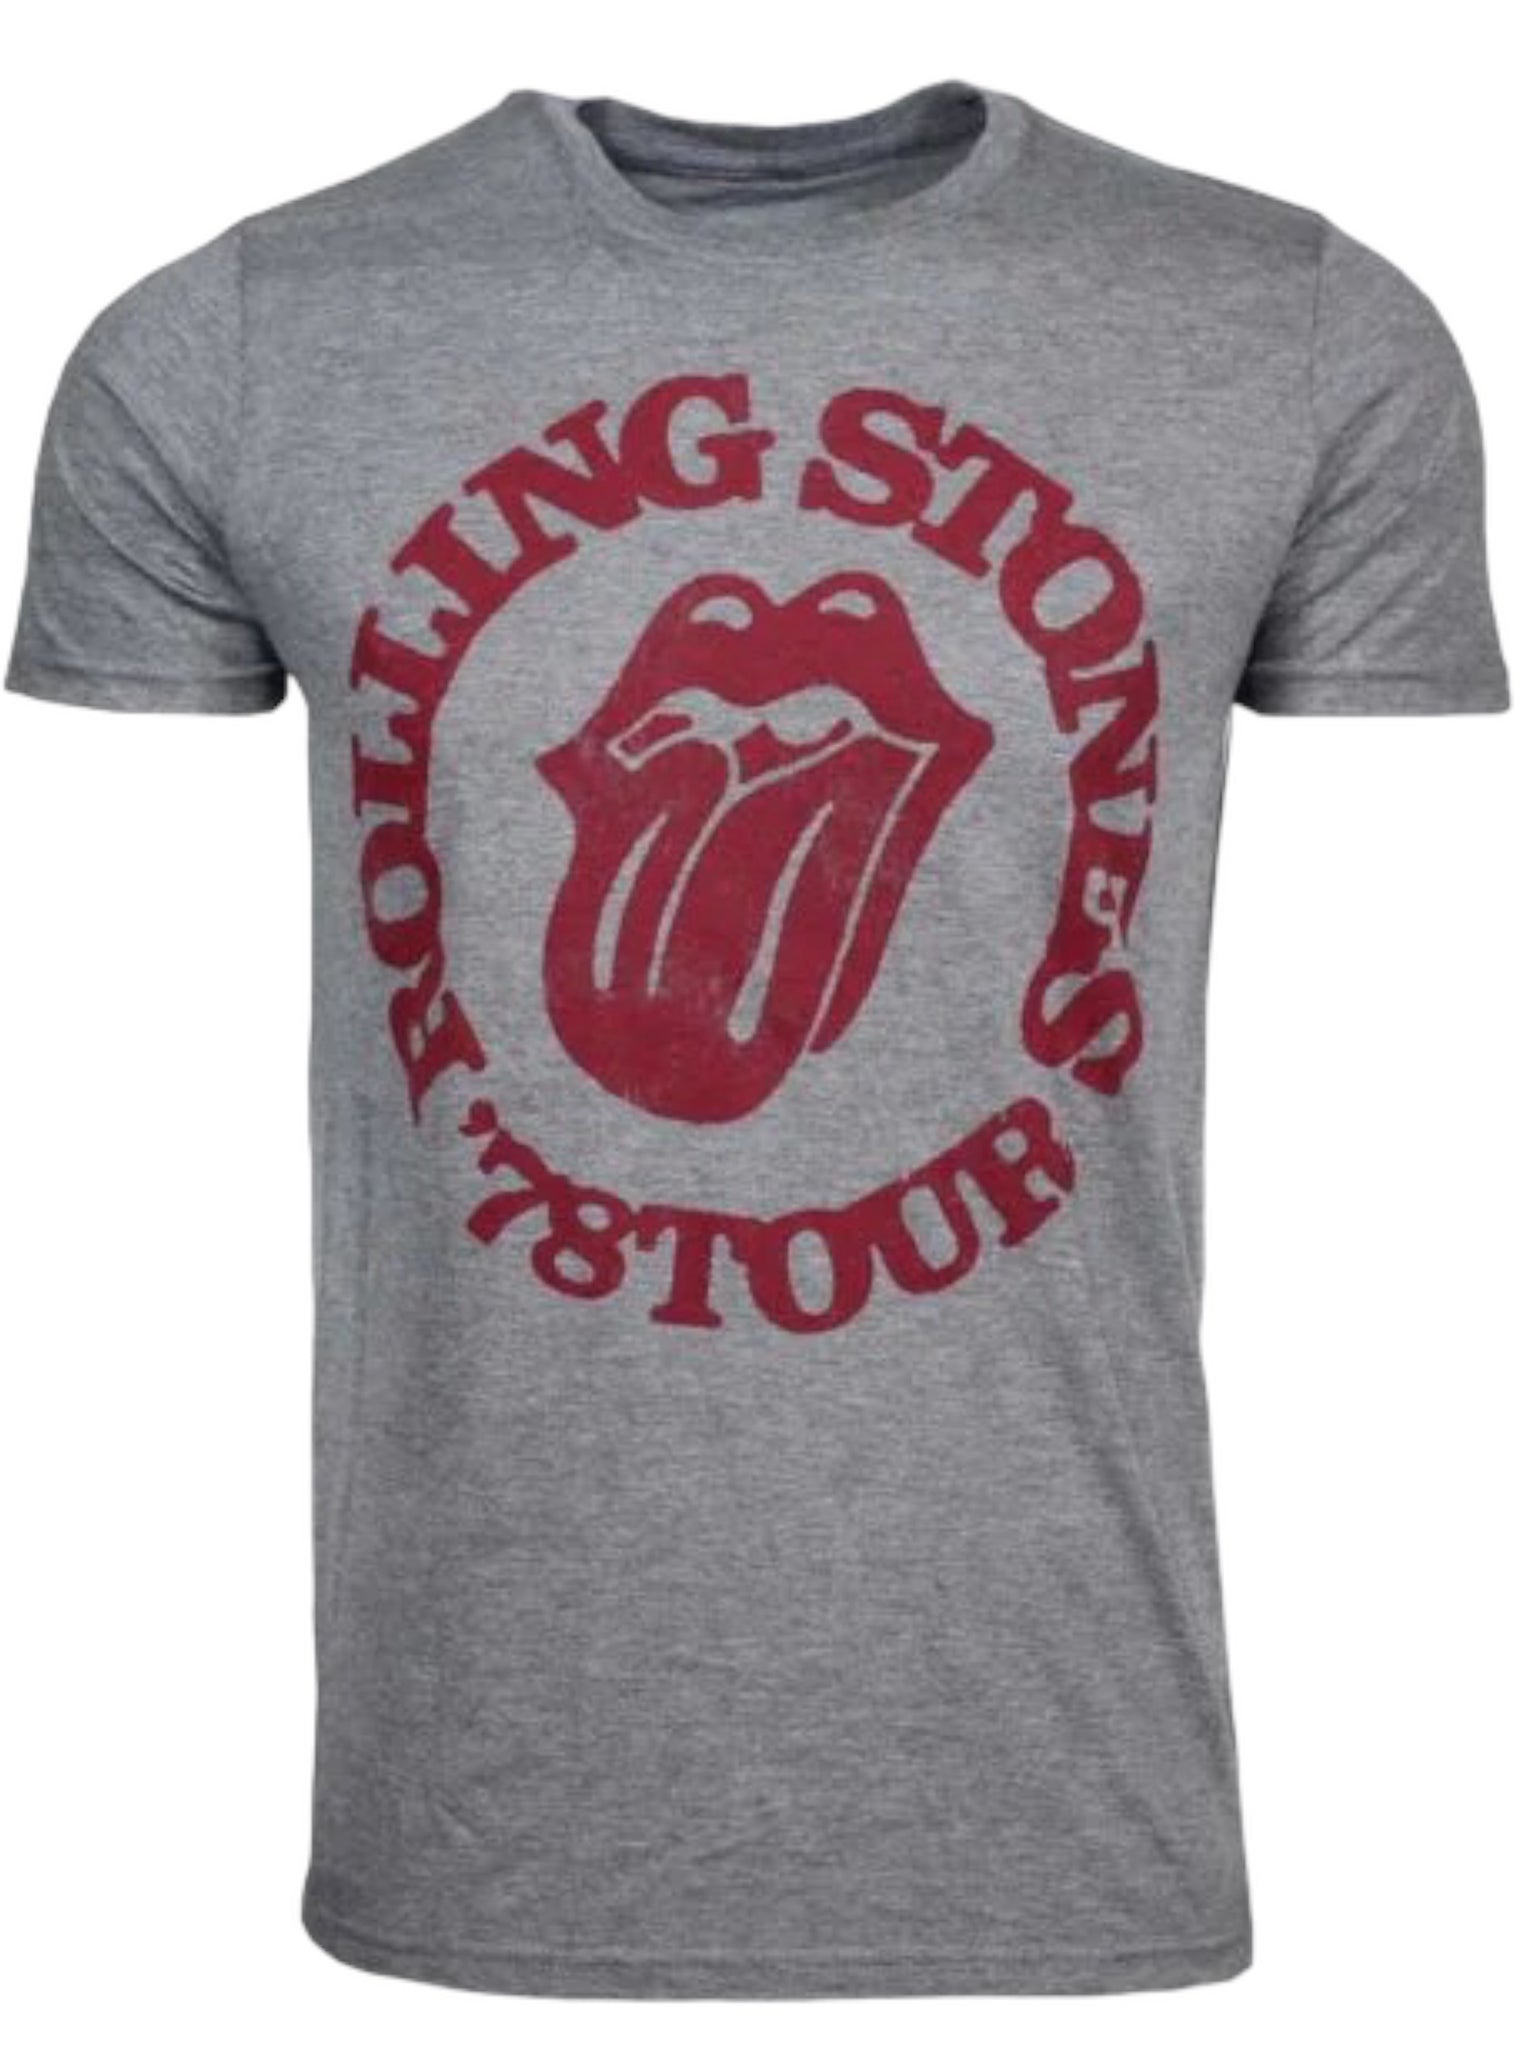 The Rolling Stones '78 Tour Circle Men's Tee